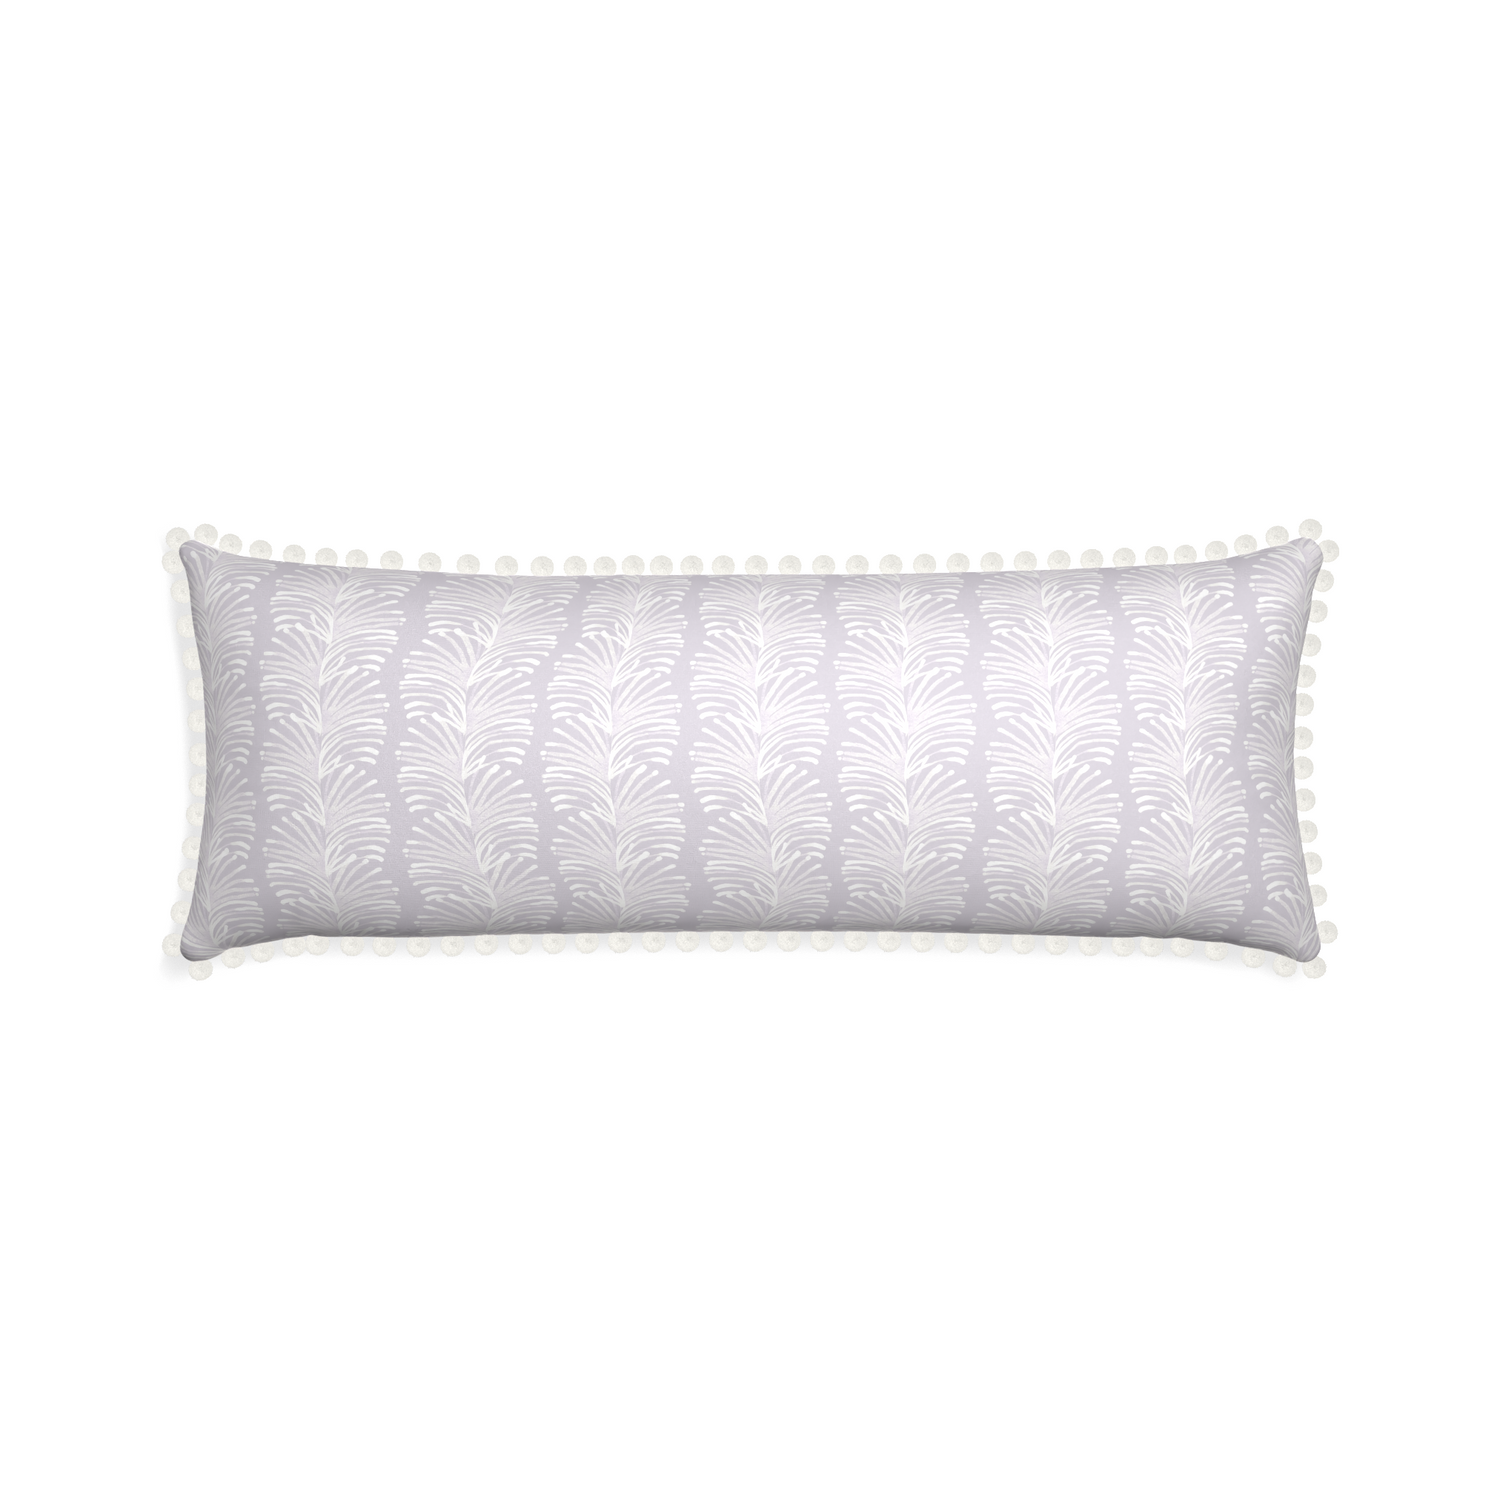 Xl-lumbar emma lavender custom pillow with snow pom pom on white background